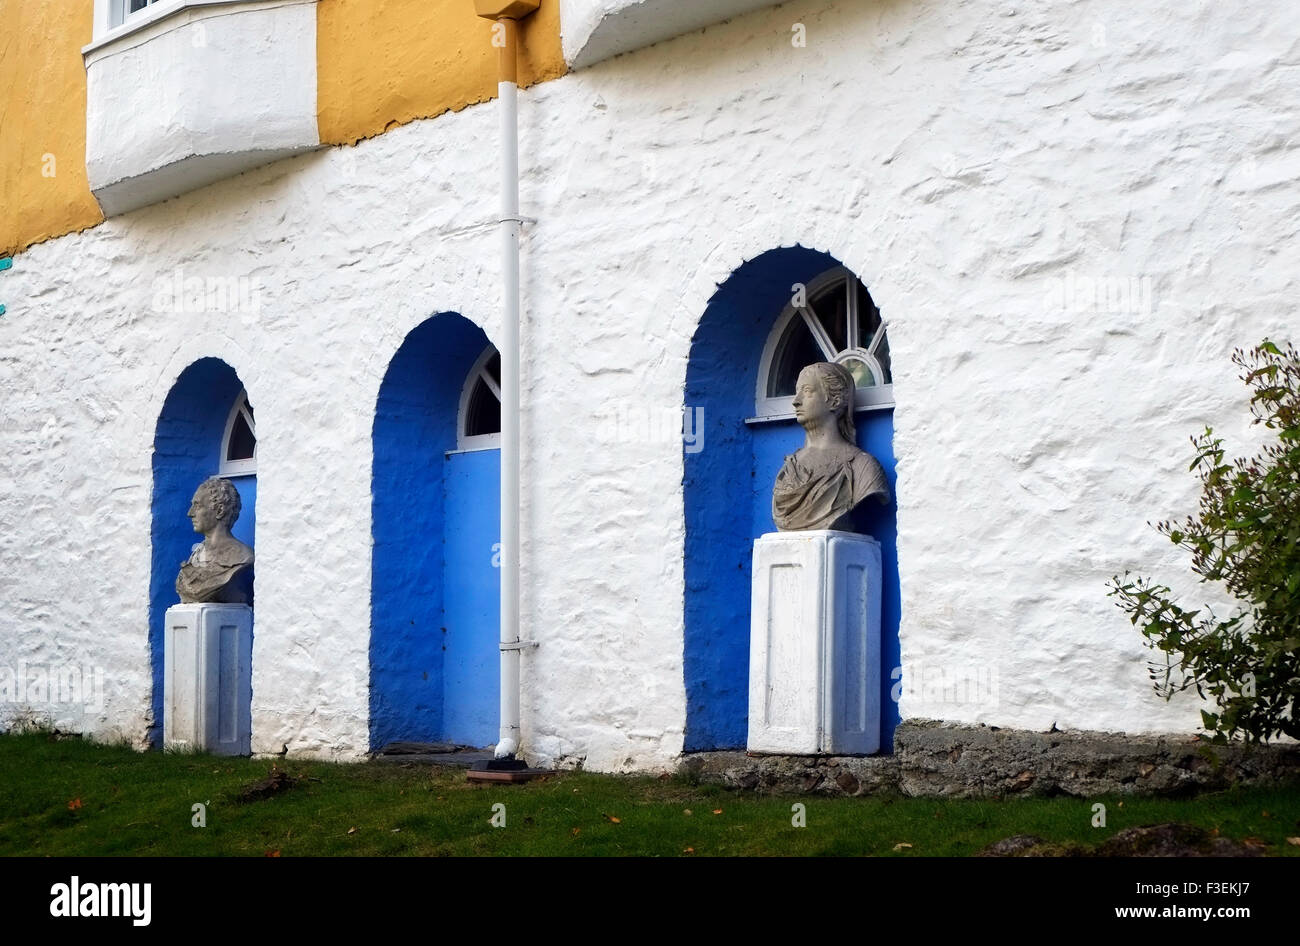 Historical Sculptured Busts on Plinths Port Meirion Gwynedd North Wales UK United Kingdom Europe Stock Photo